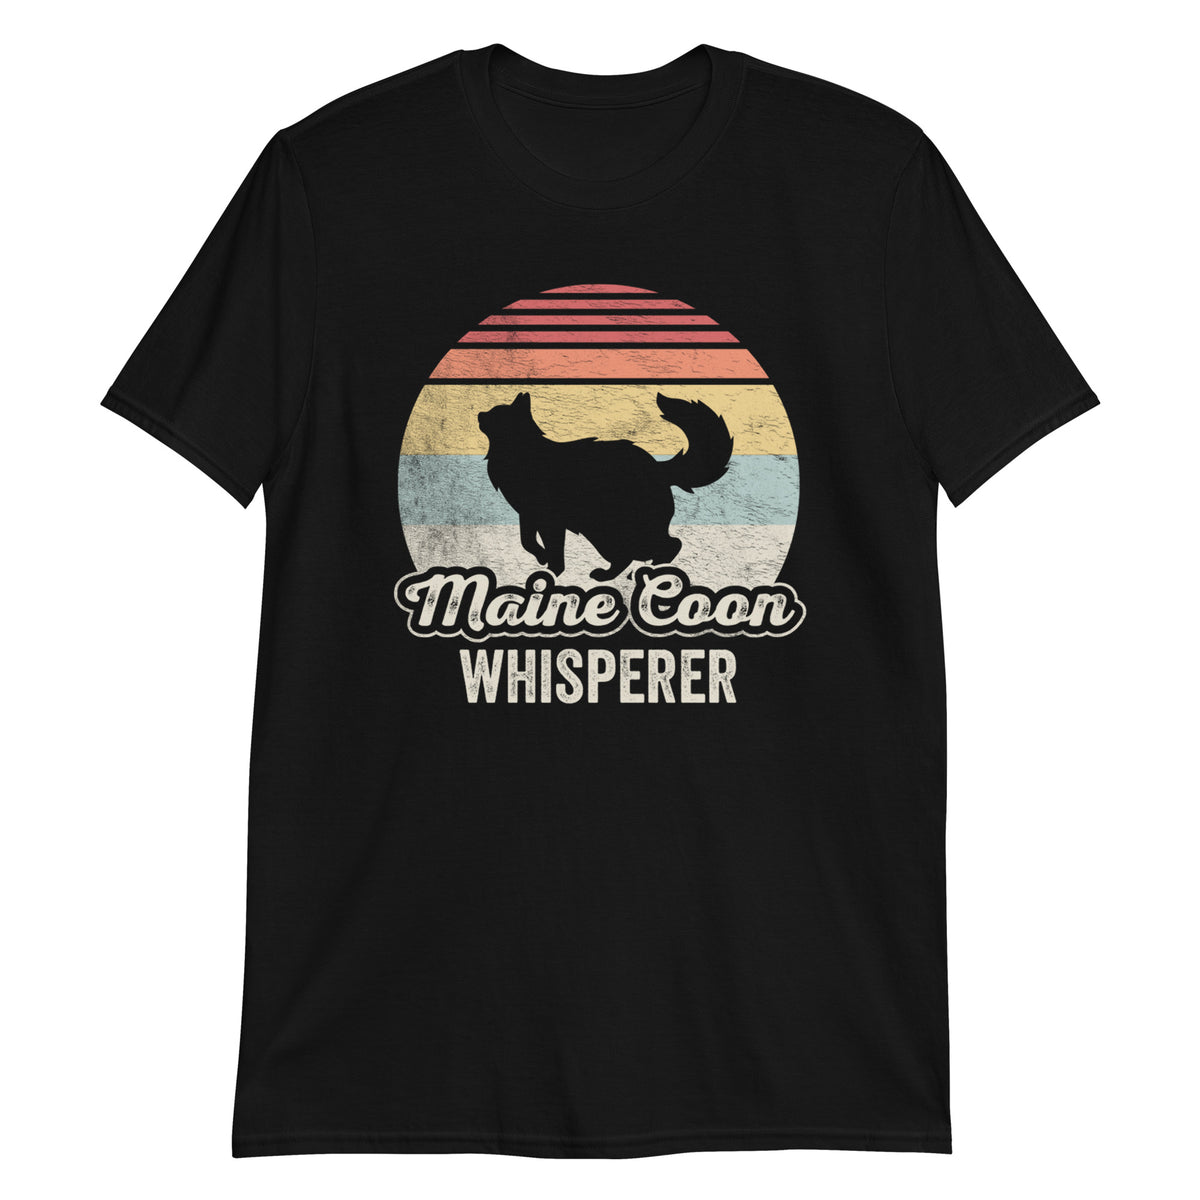 Maine Coon Whisperer Vintage Classic Retro Animal Love T-Shirt